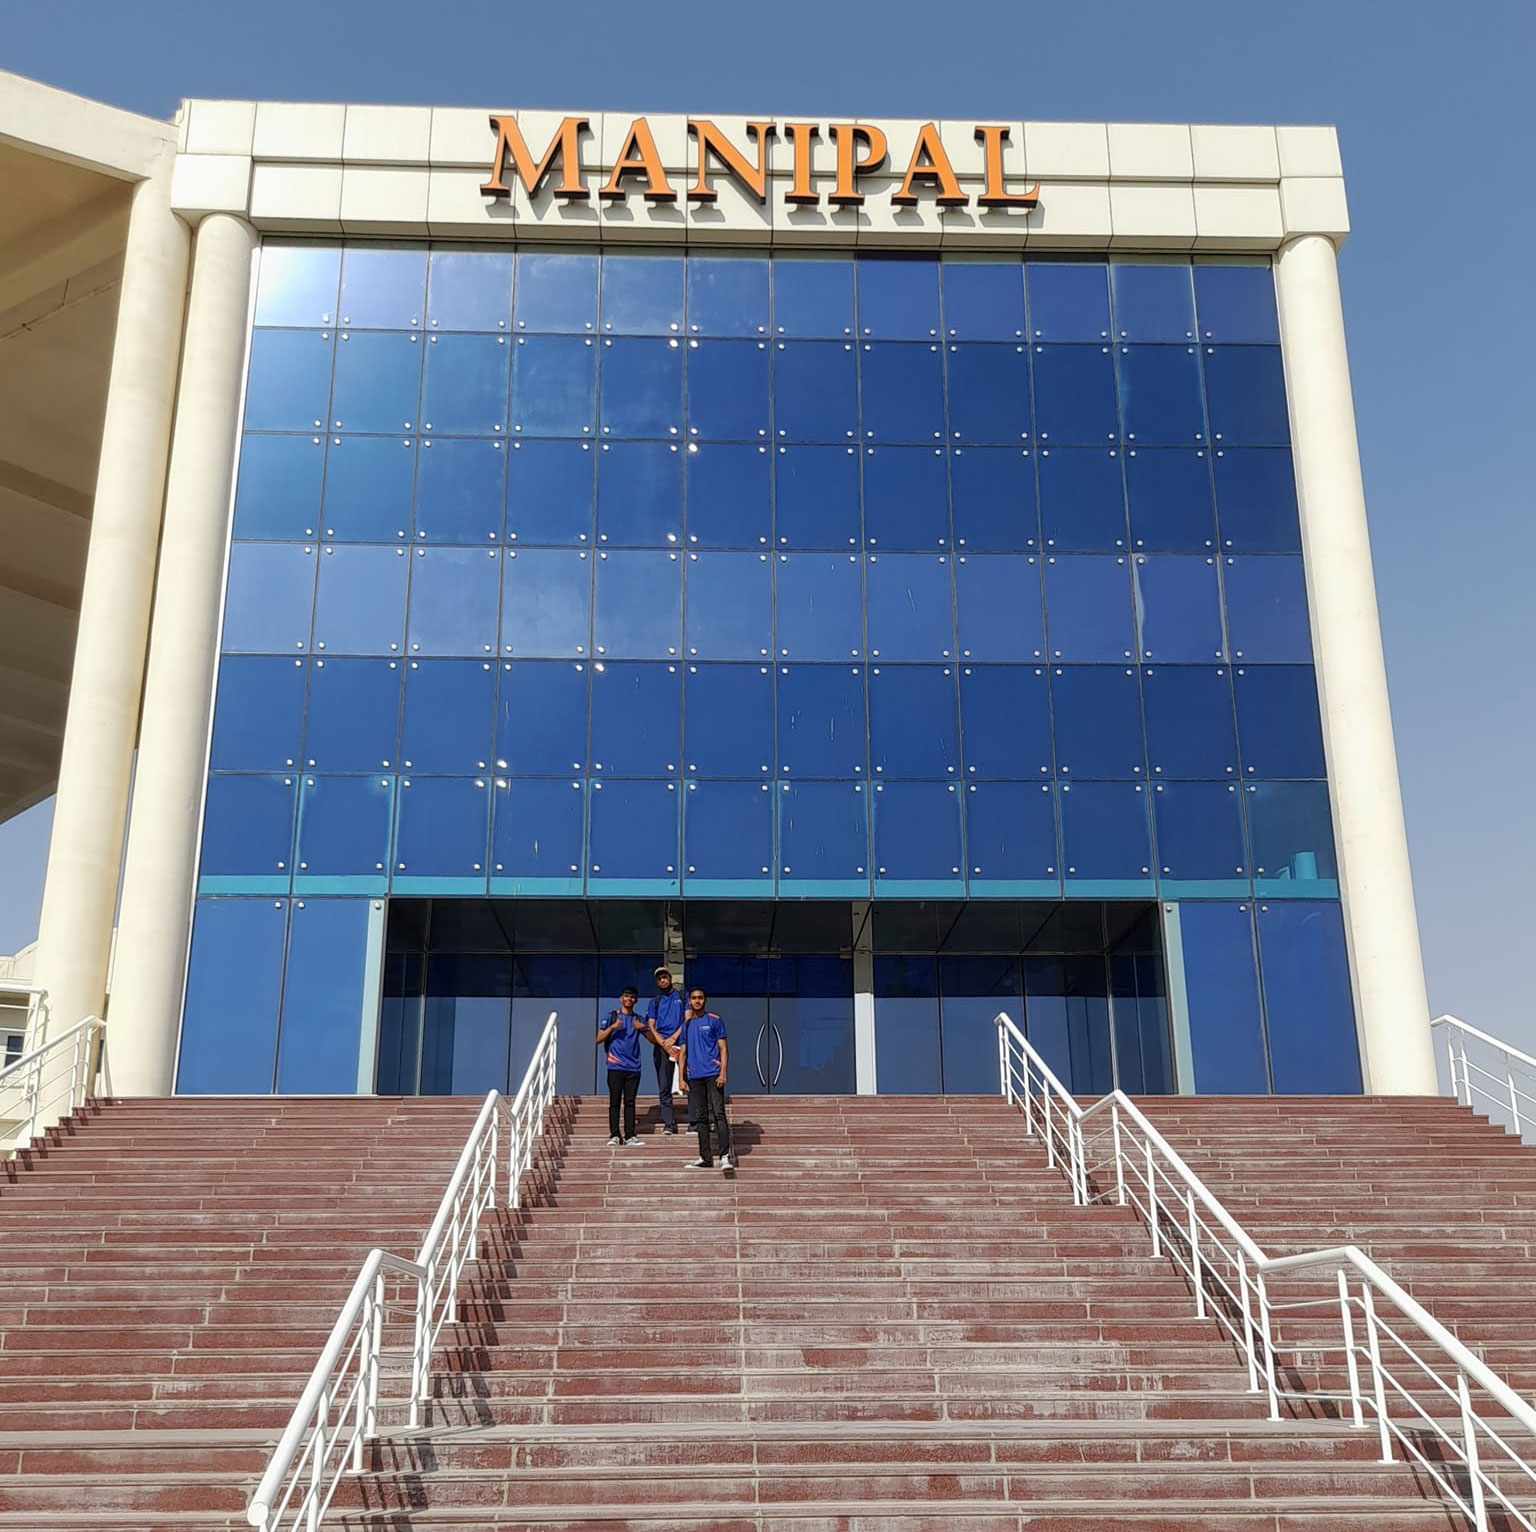 Manipal Engineering University in Dubai